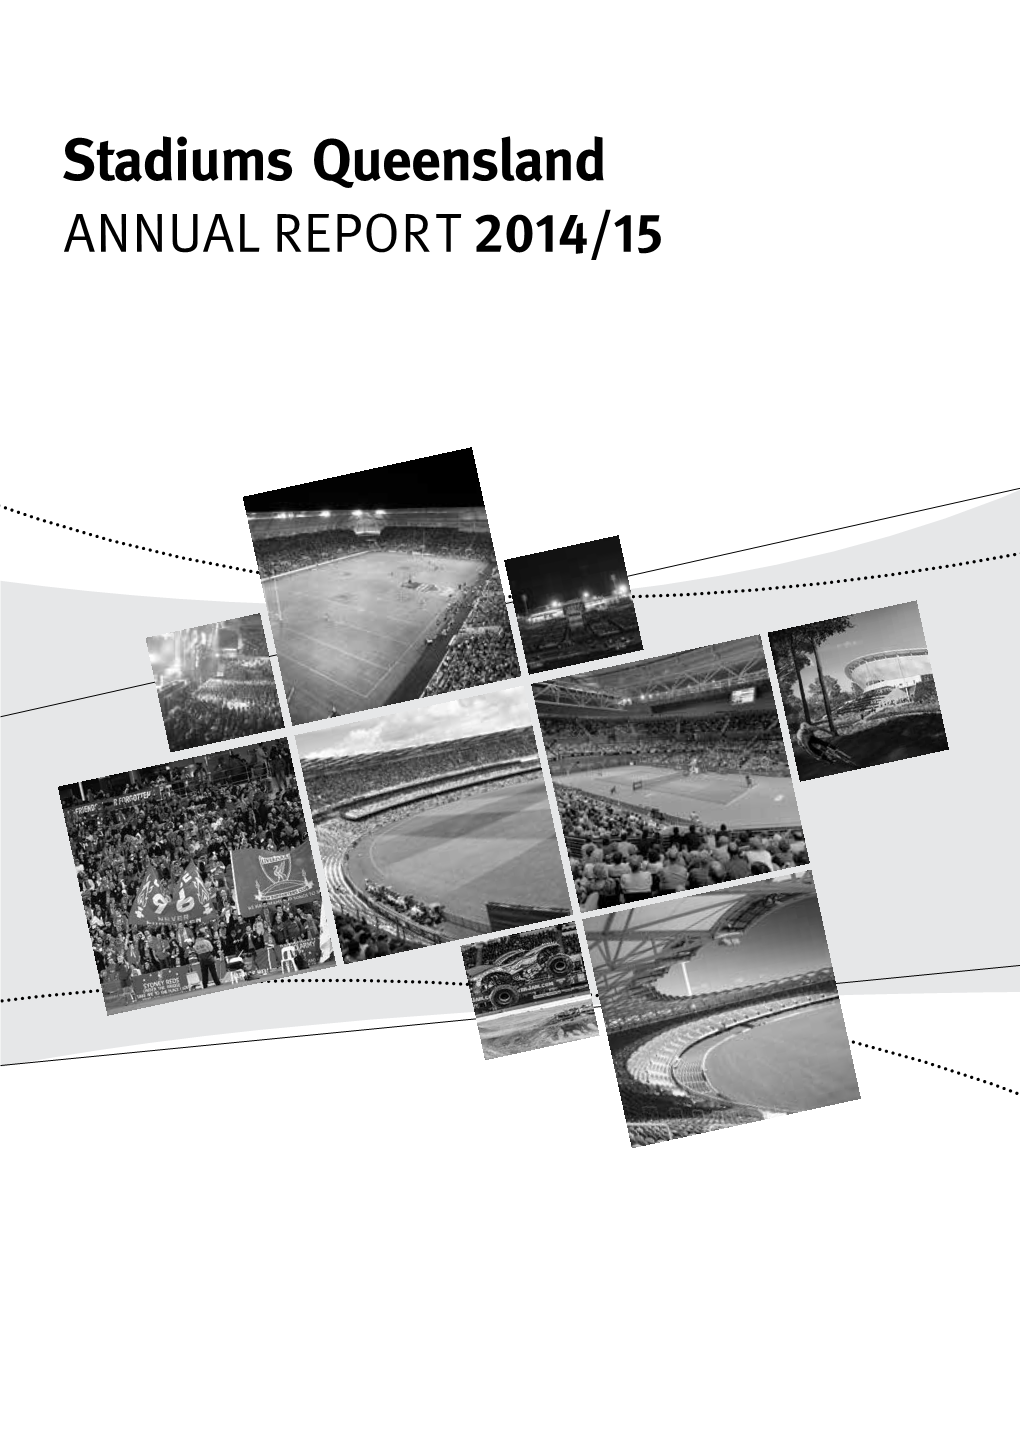 ANNUAL REPORT 2014/15 Stadiums Queensland Annual Report 2014/2015